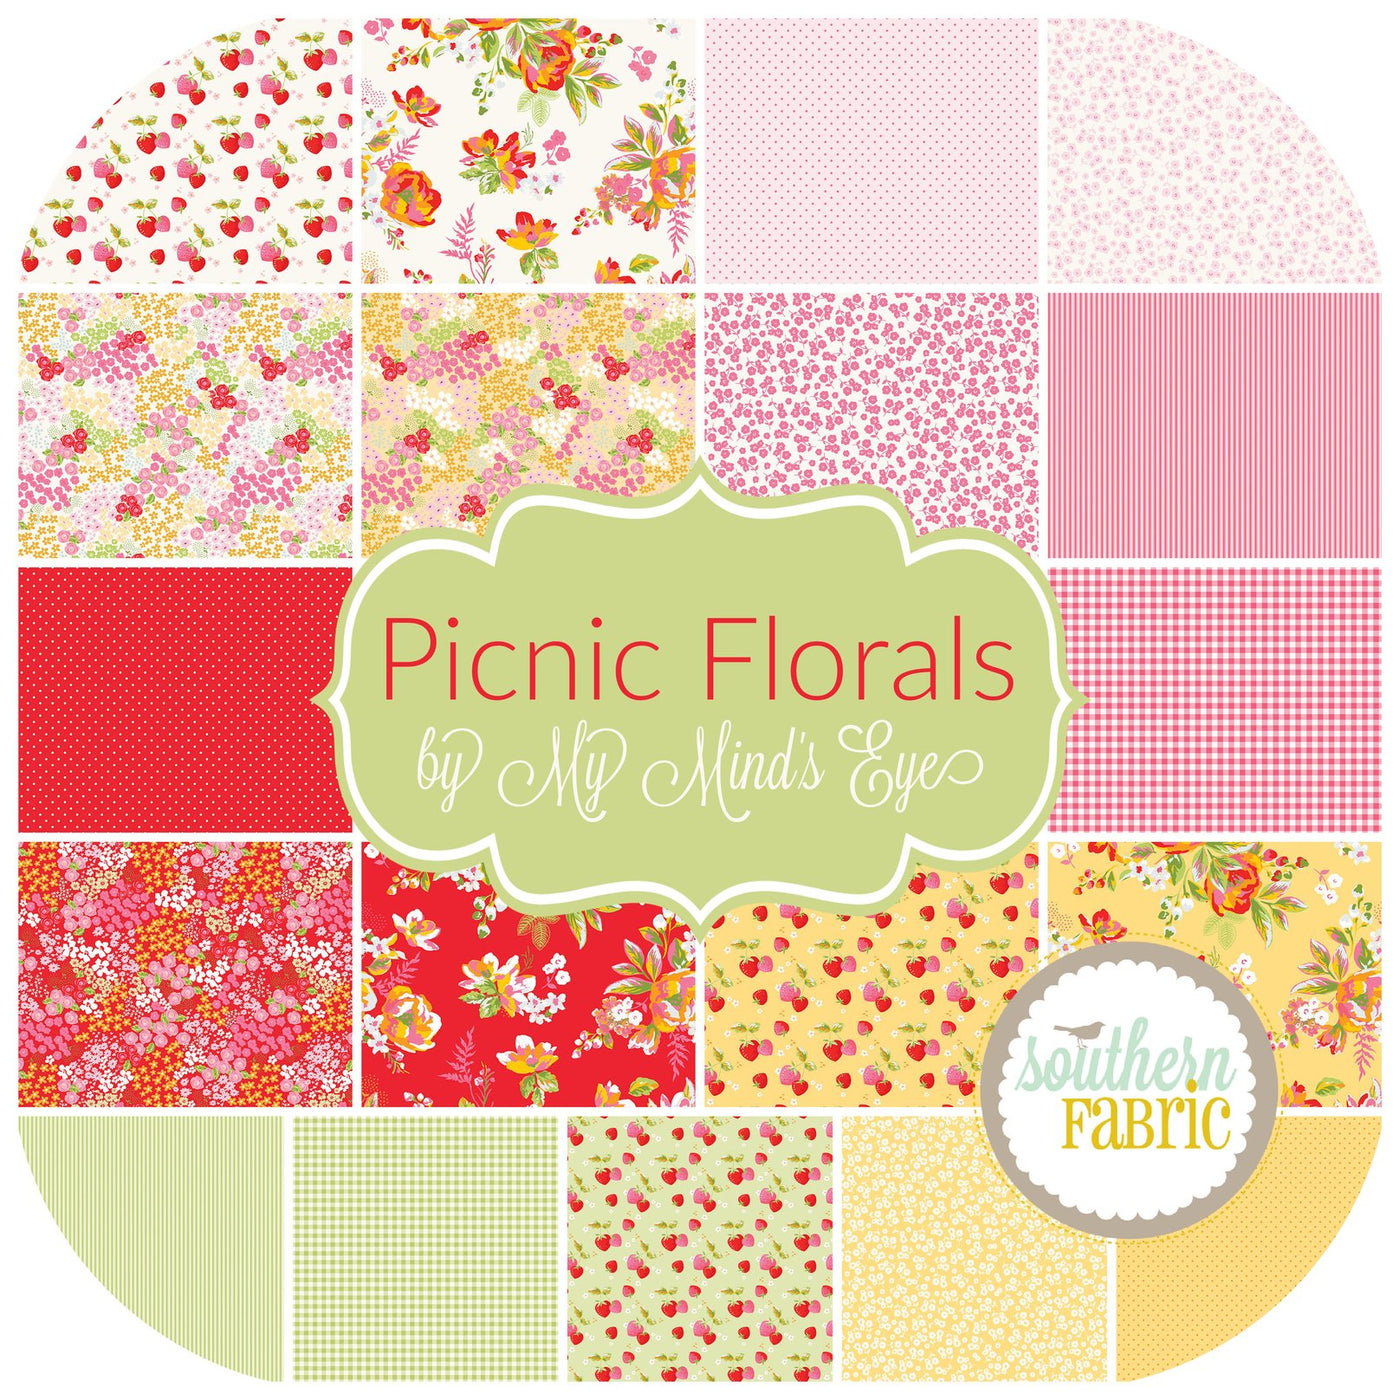 Picnic Florals Fat Quarter Bundle (21 pcs) by My Mind's Eye for Riley Blake (FQ-14610-21)